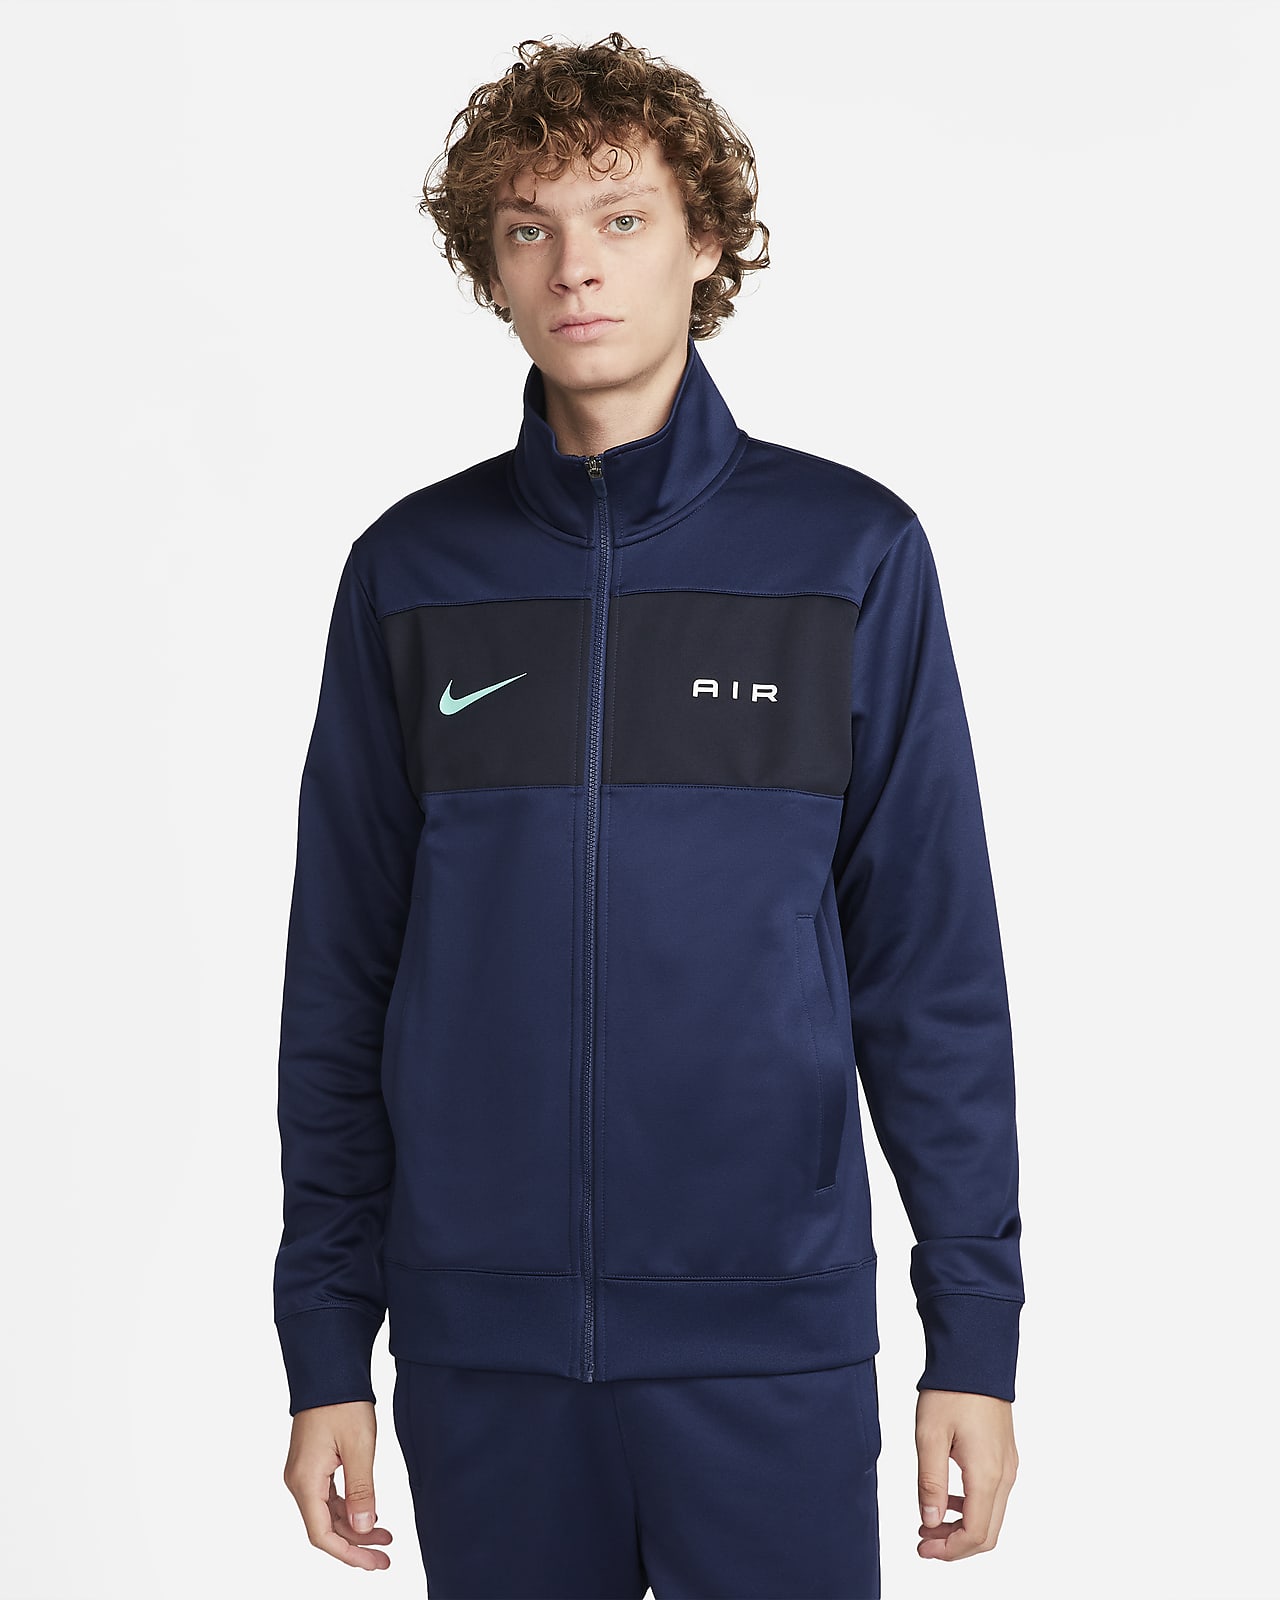 Nike Air Men's Tracksuit Jacket